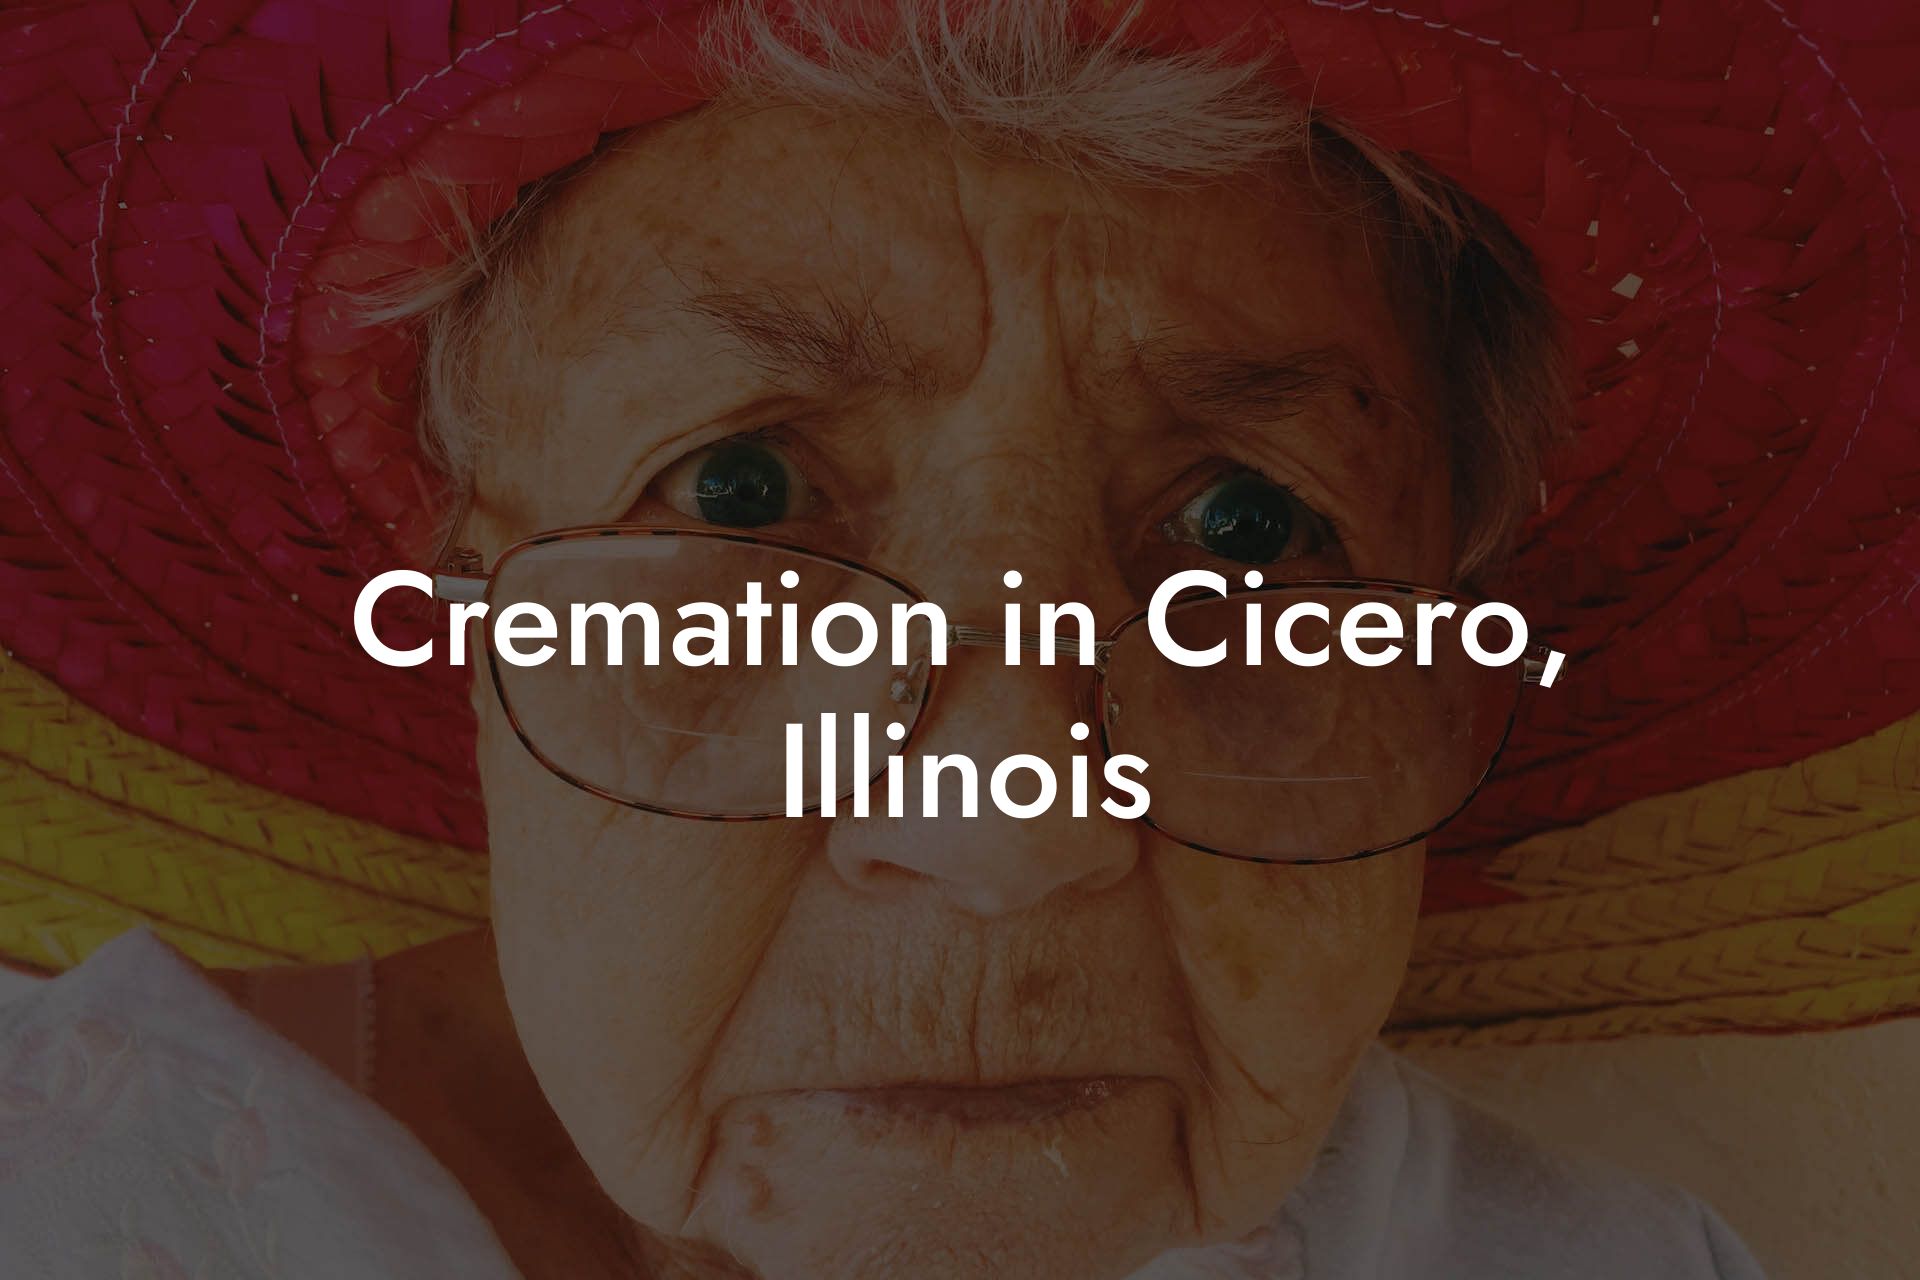 Cremation in Cicero, Illinois